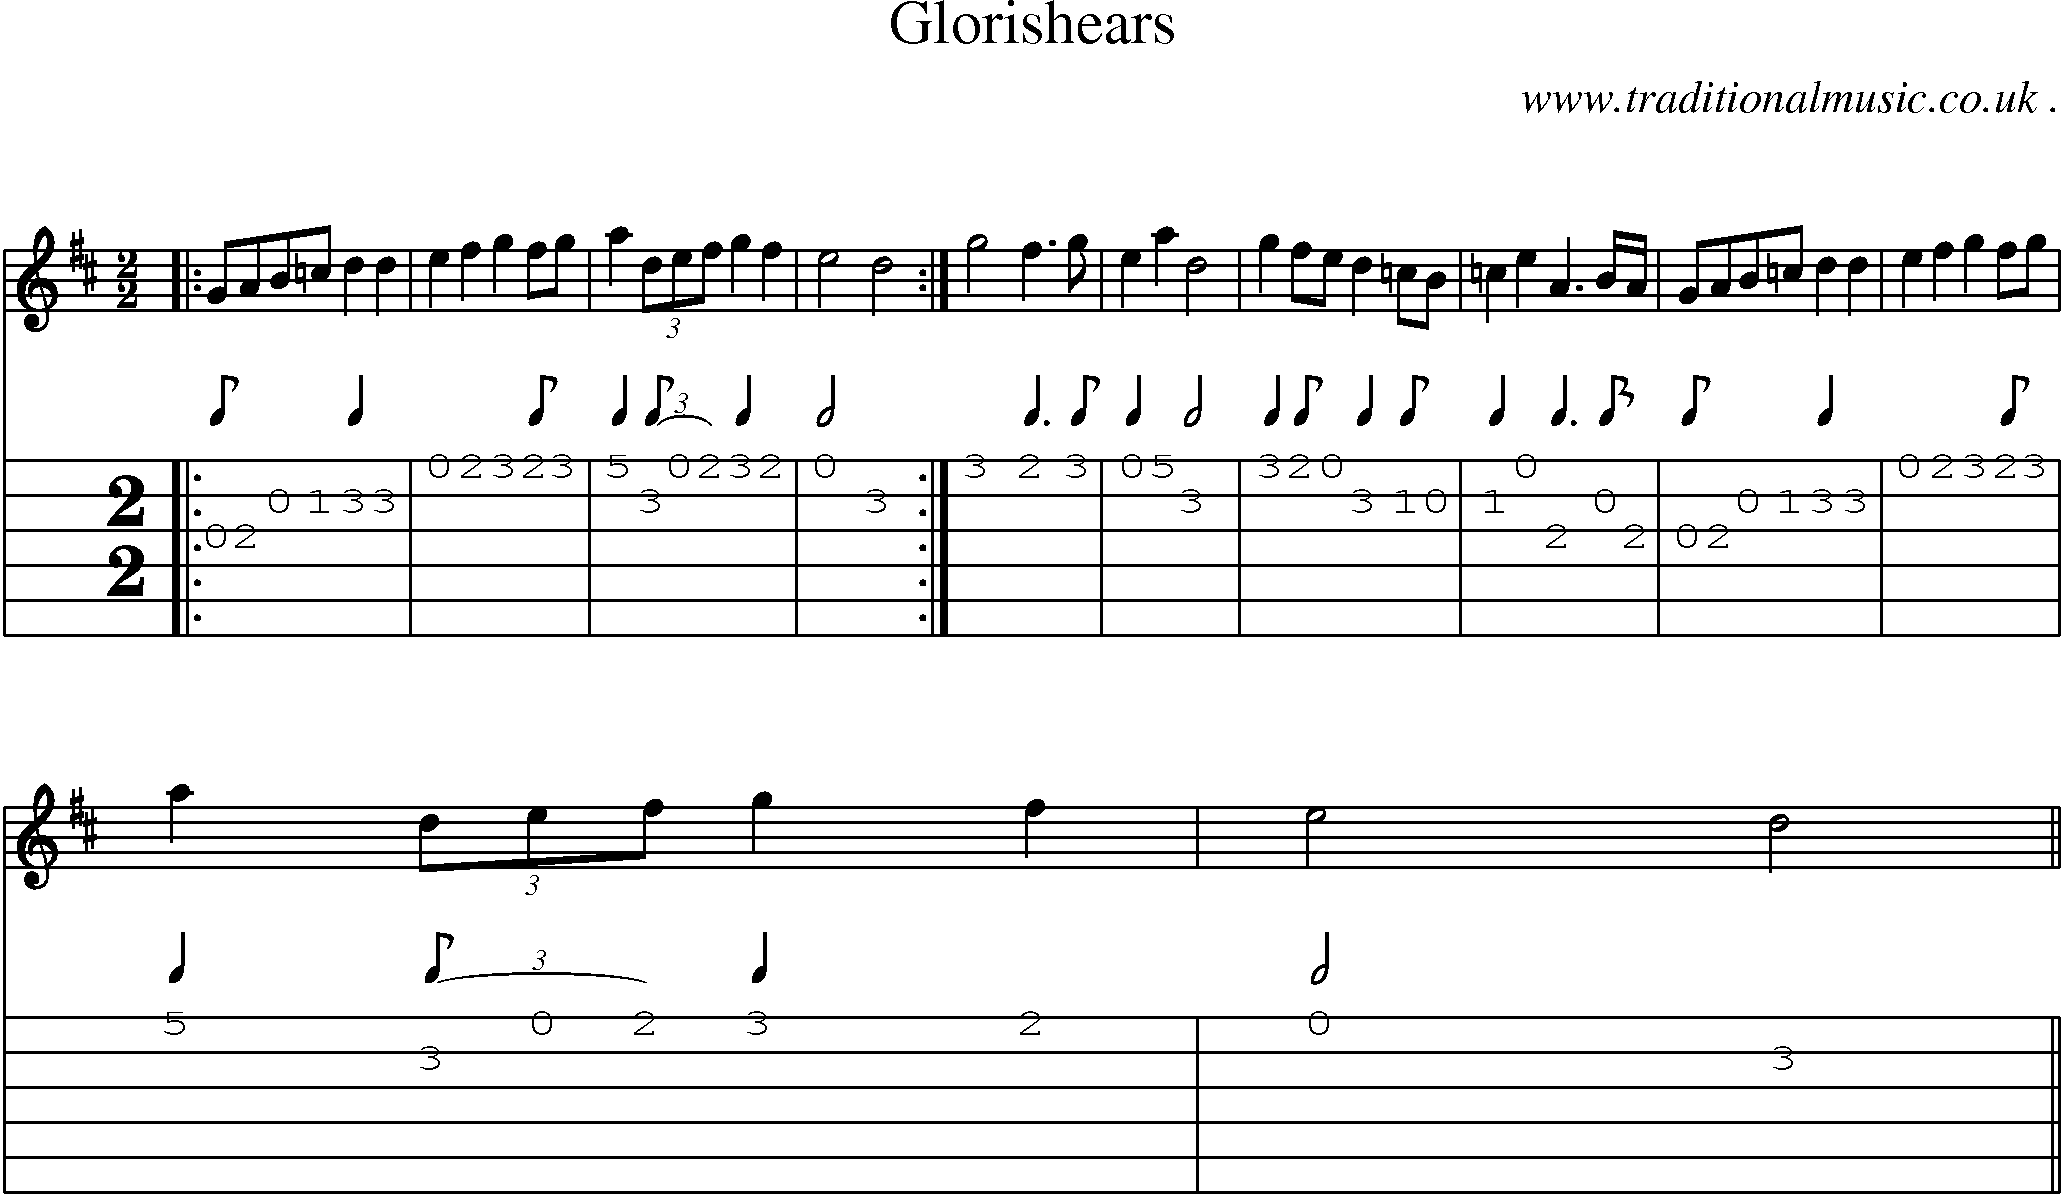 Sheet-Music and Guitar Tabs for Glorishears